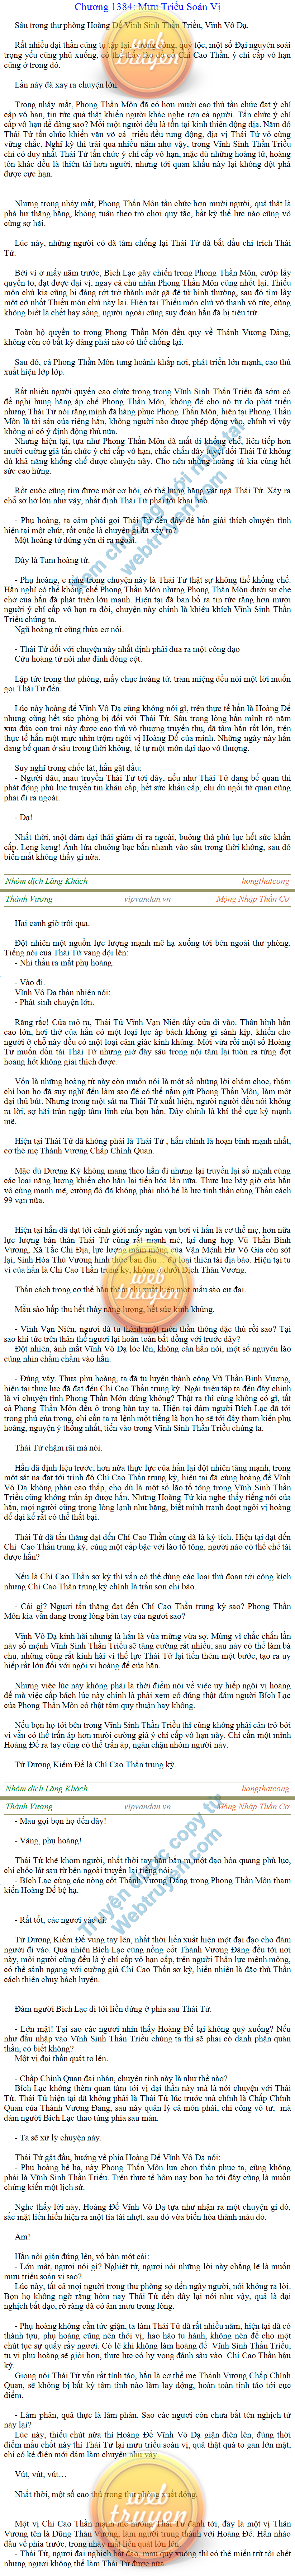 Thanh-vuong-1384.png